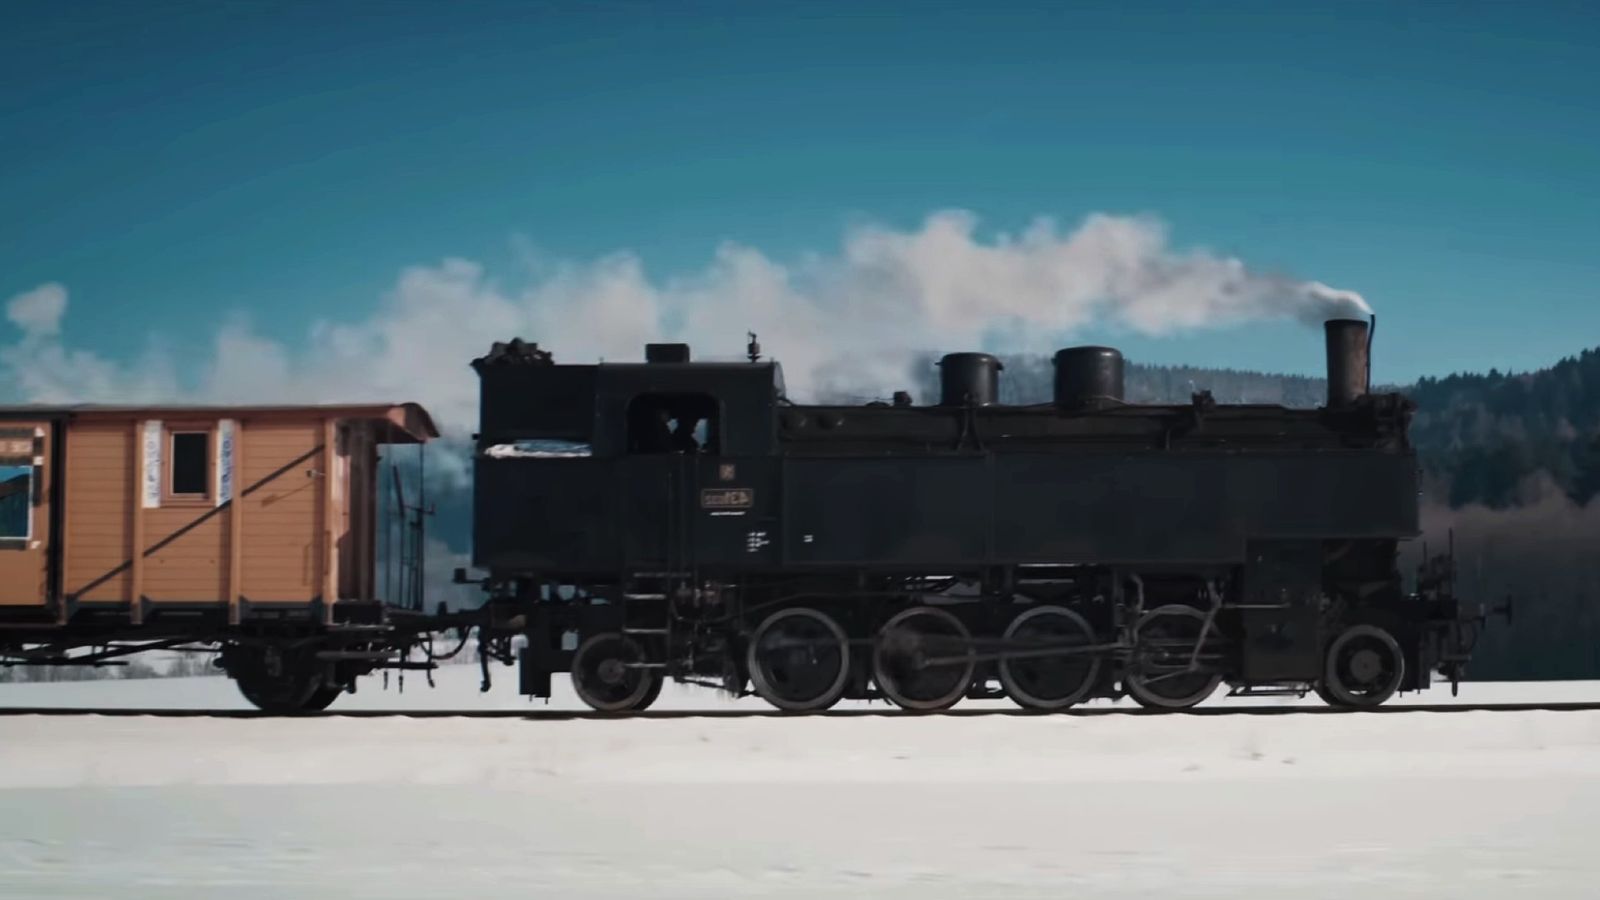 Last Train Home - side of a black steam train travelling through snow